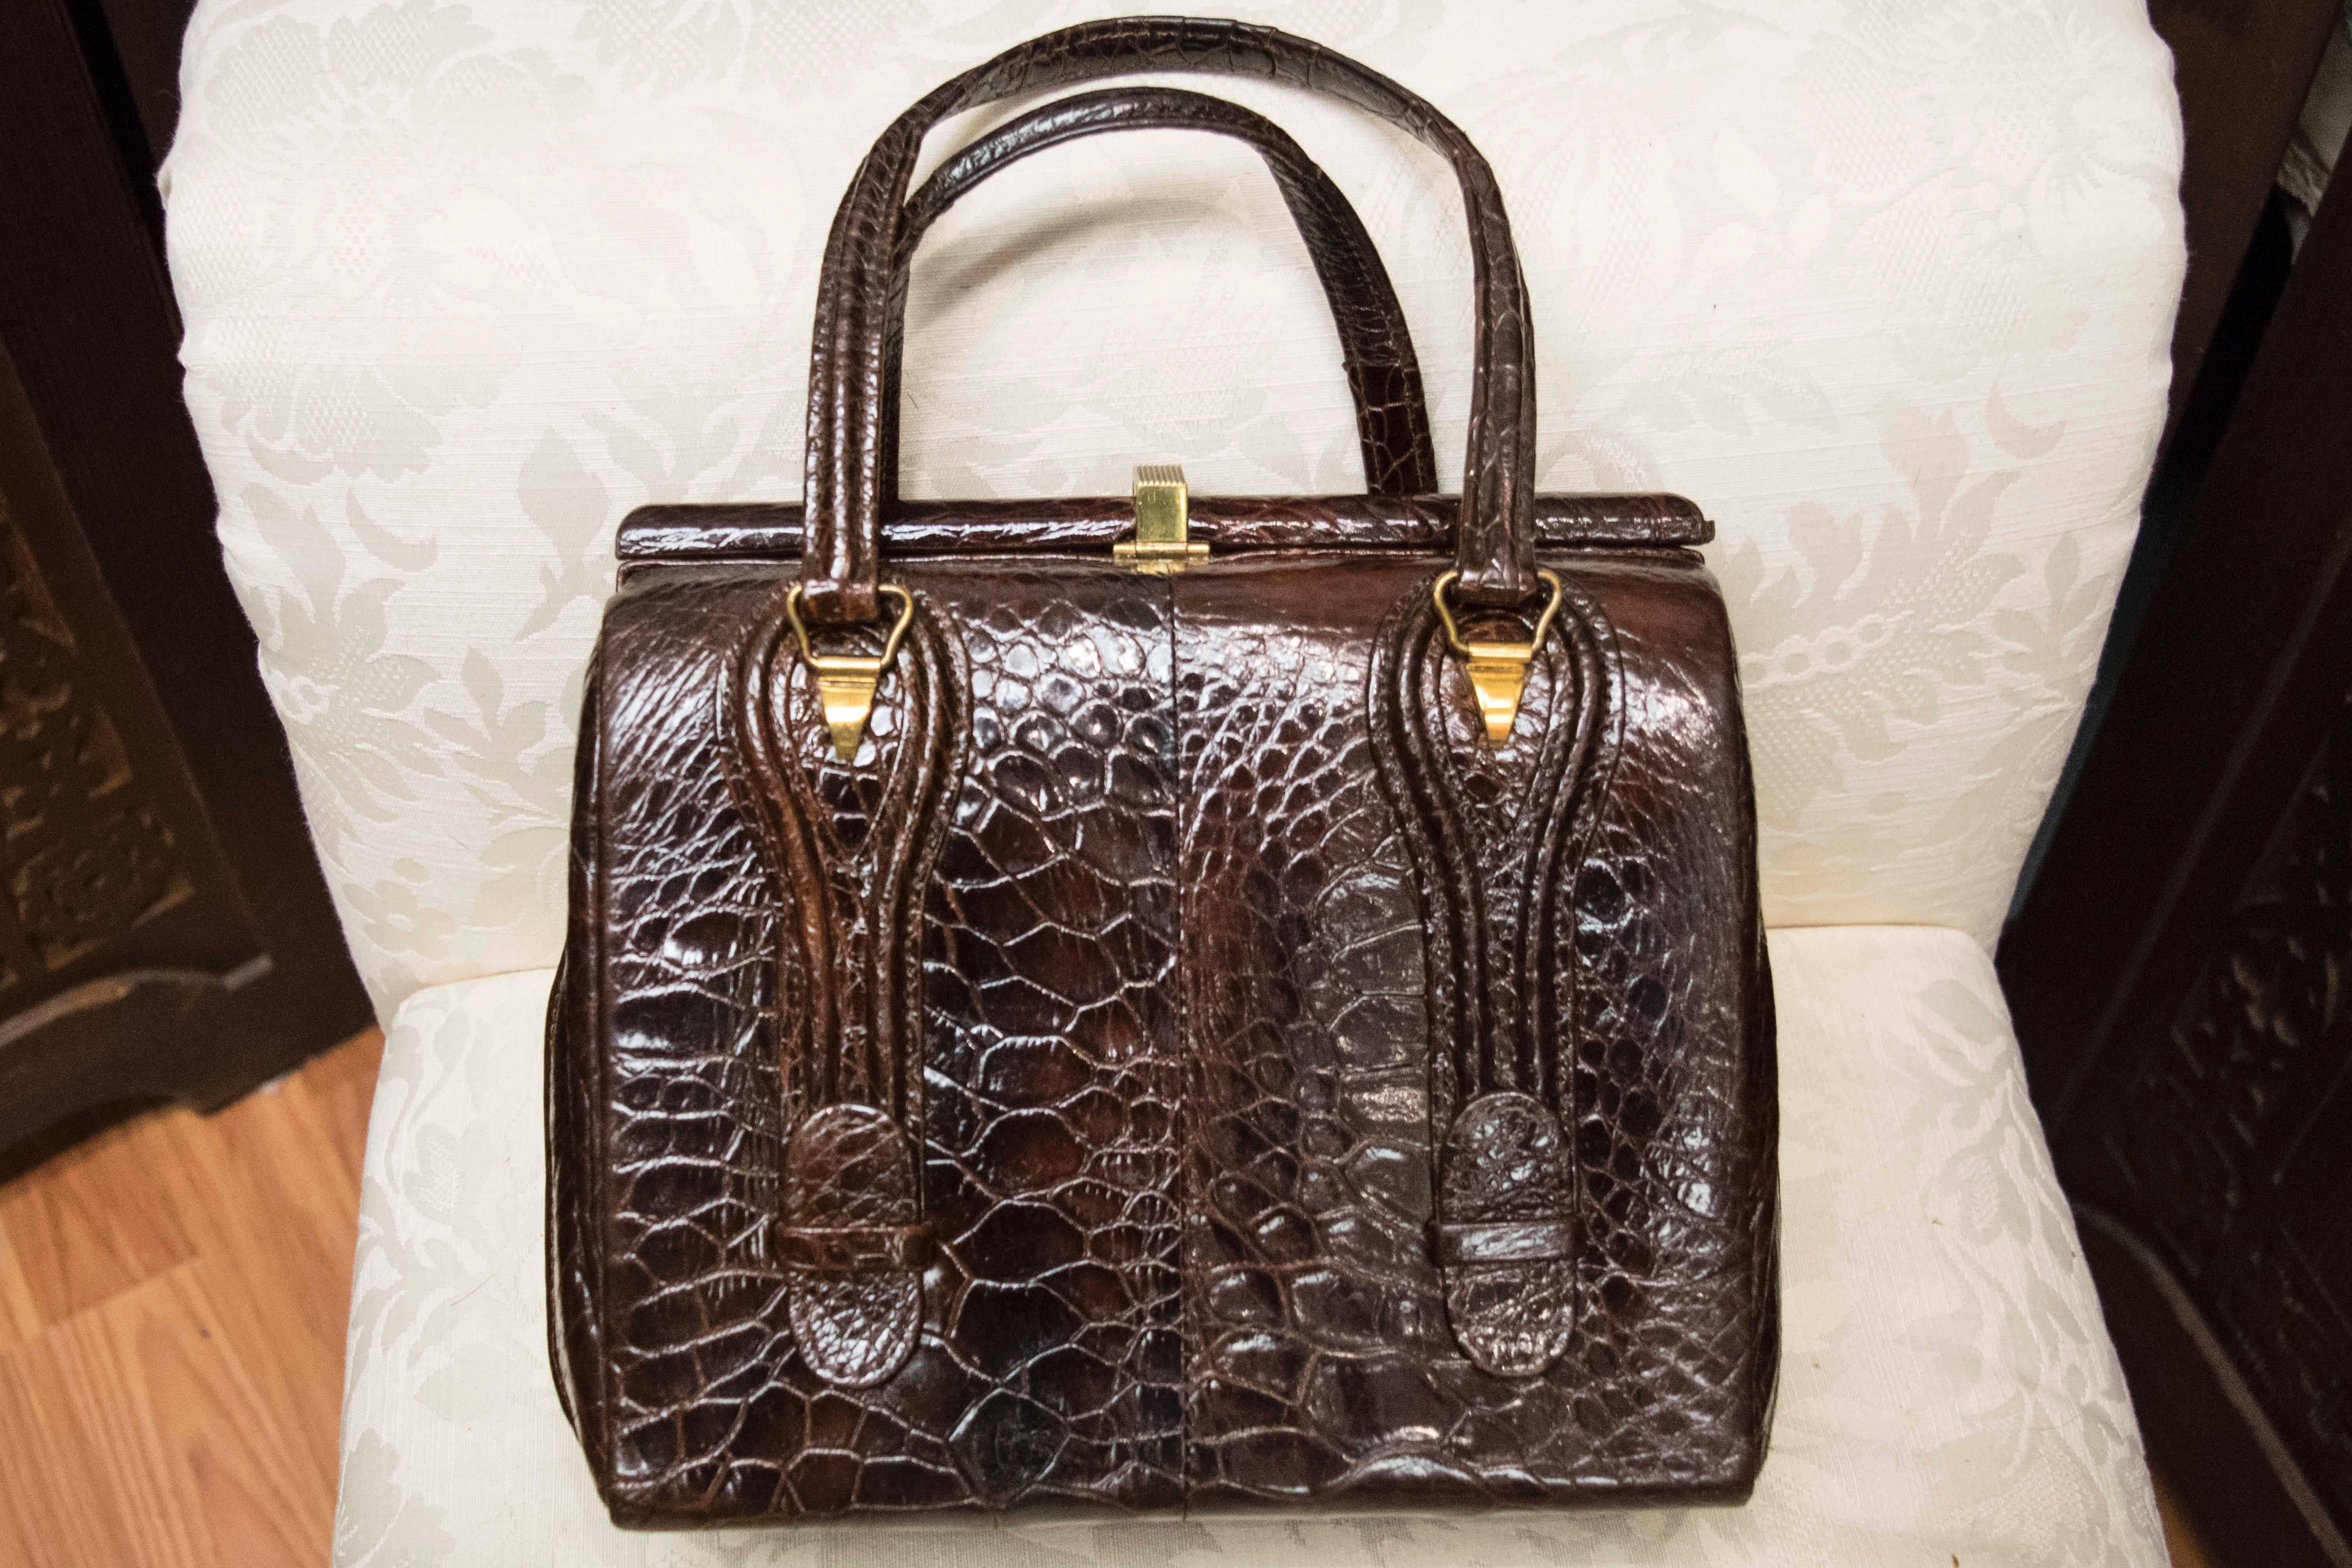 1940s Crocodile Handbag

W 8
H 8
D 4